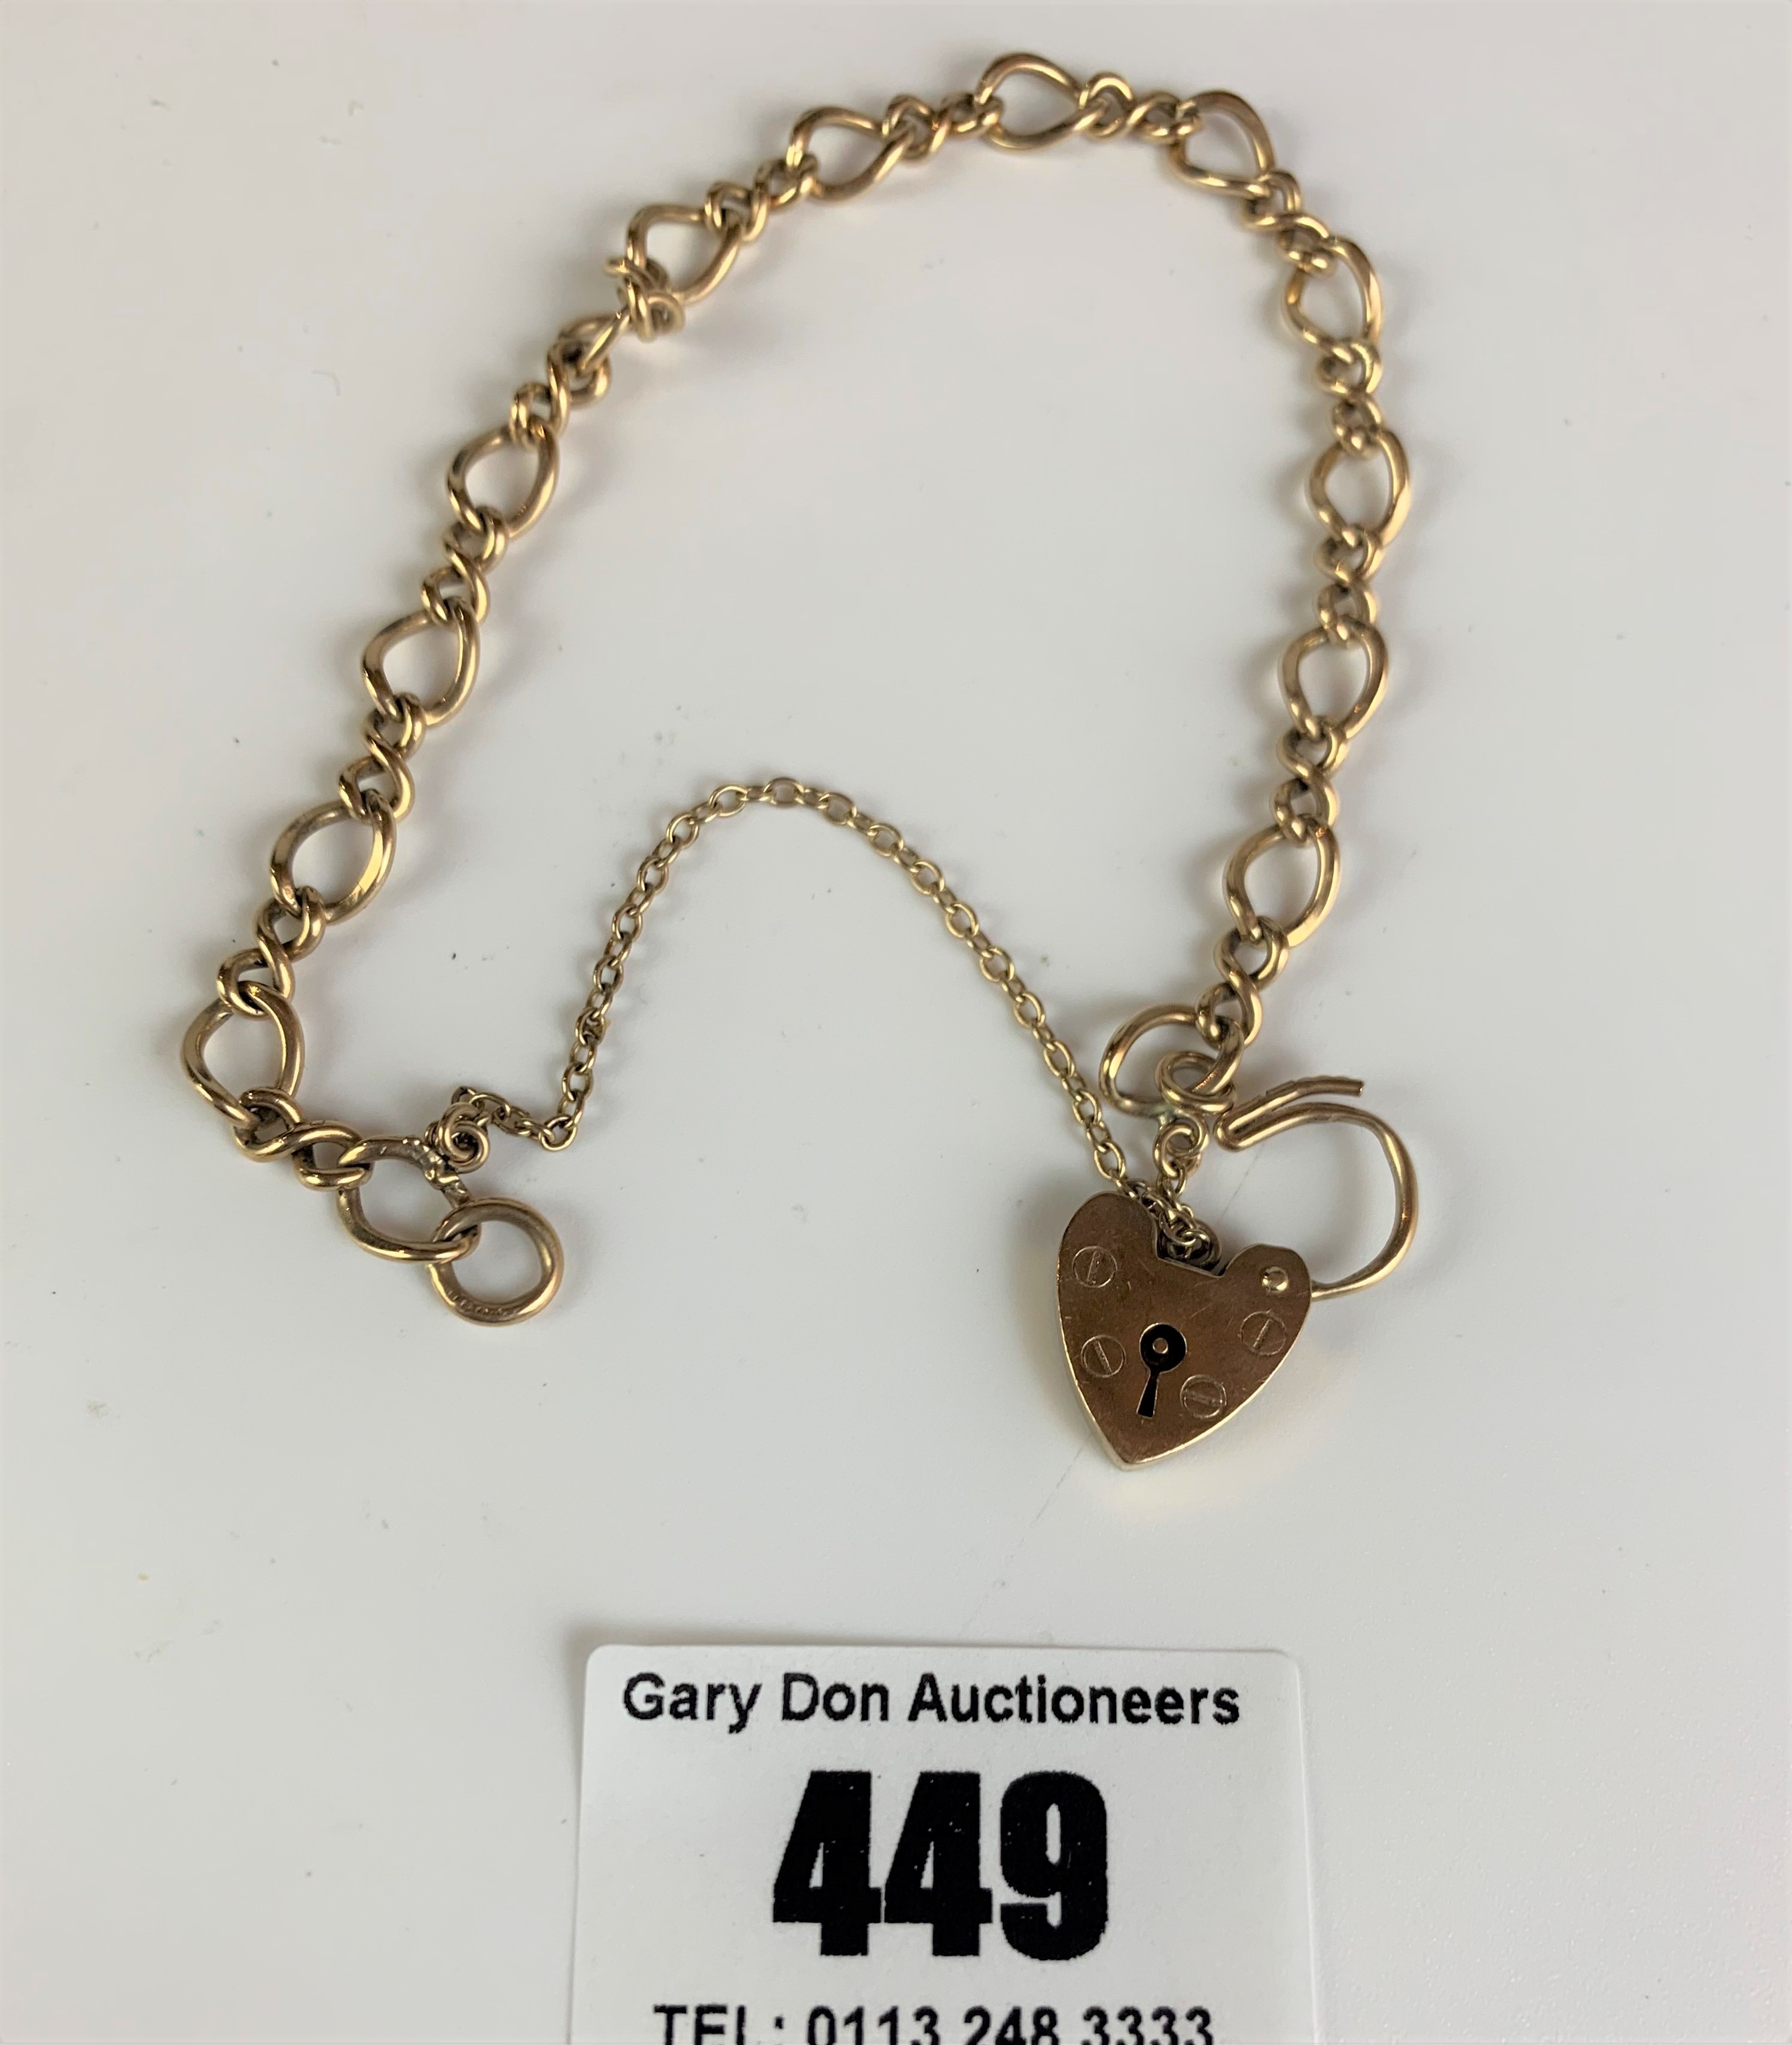 9k gold bracelet with heart lock, length 10”. W: 8.5 gms - Image 2 of 4